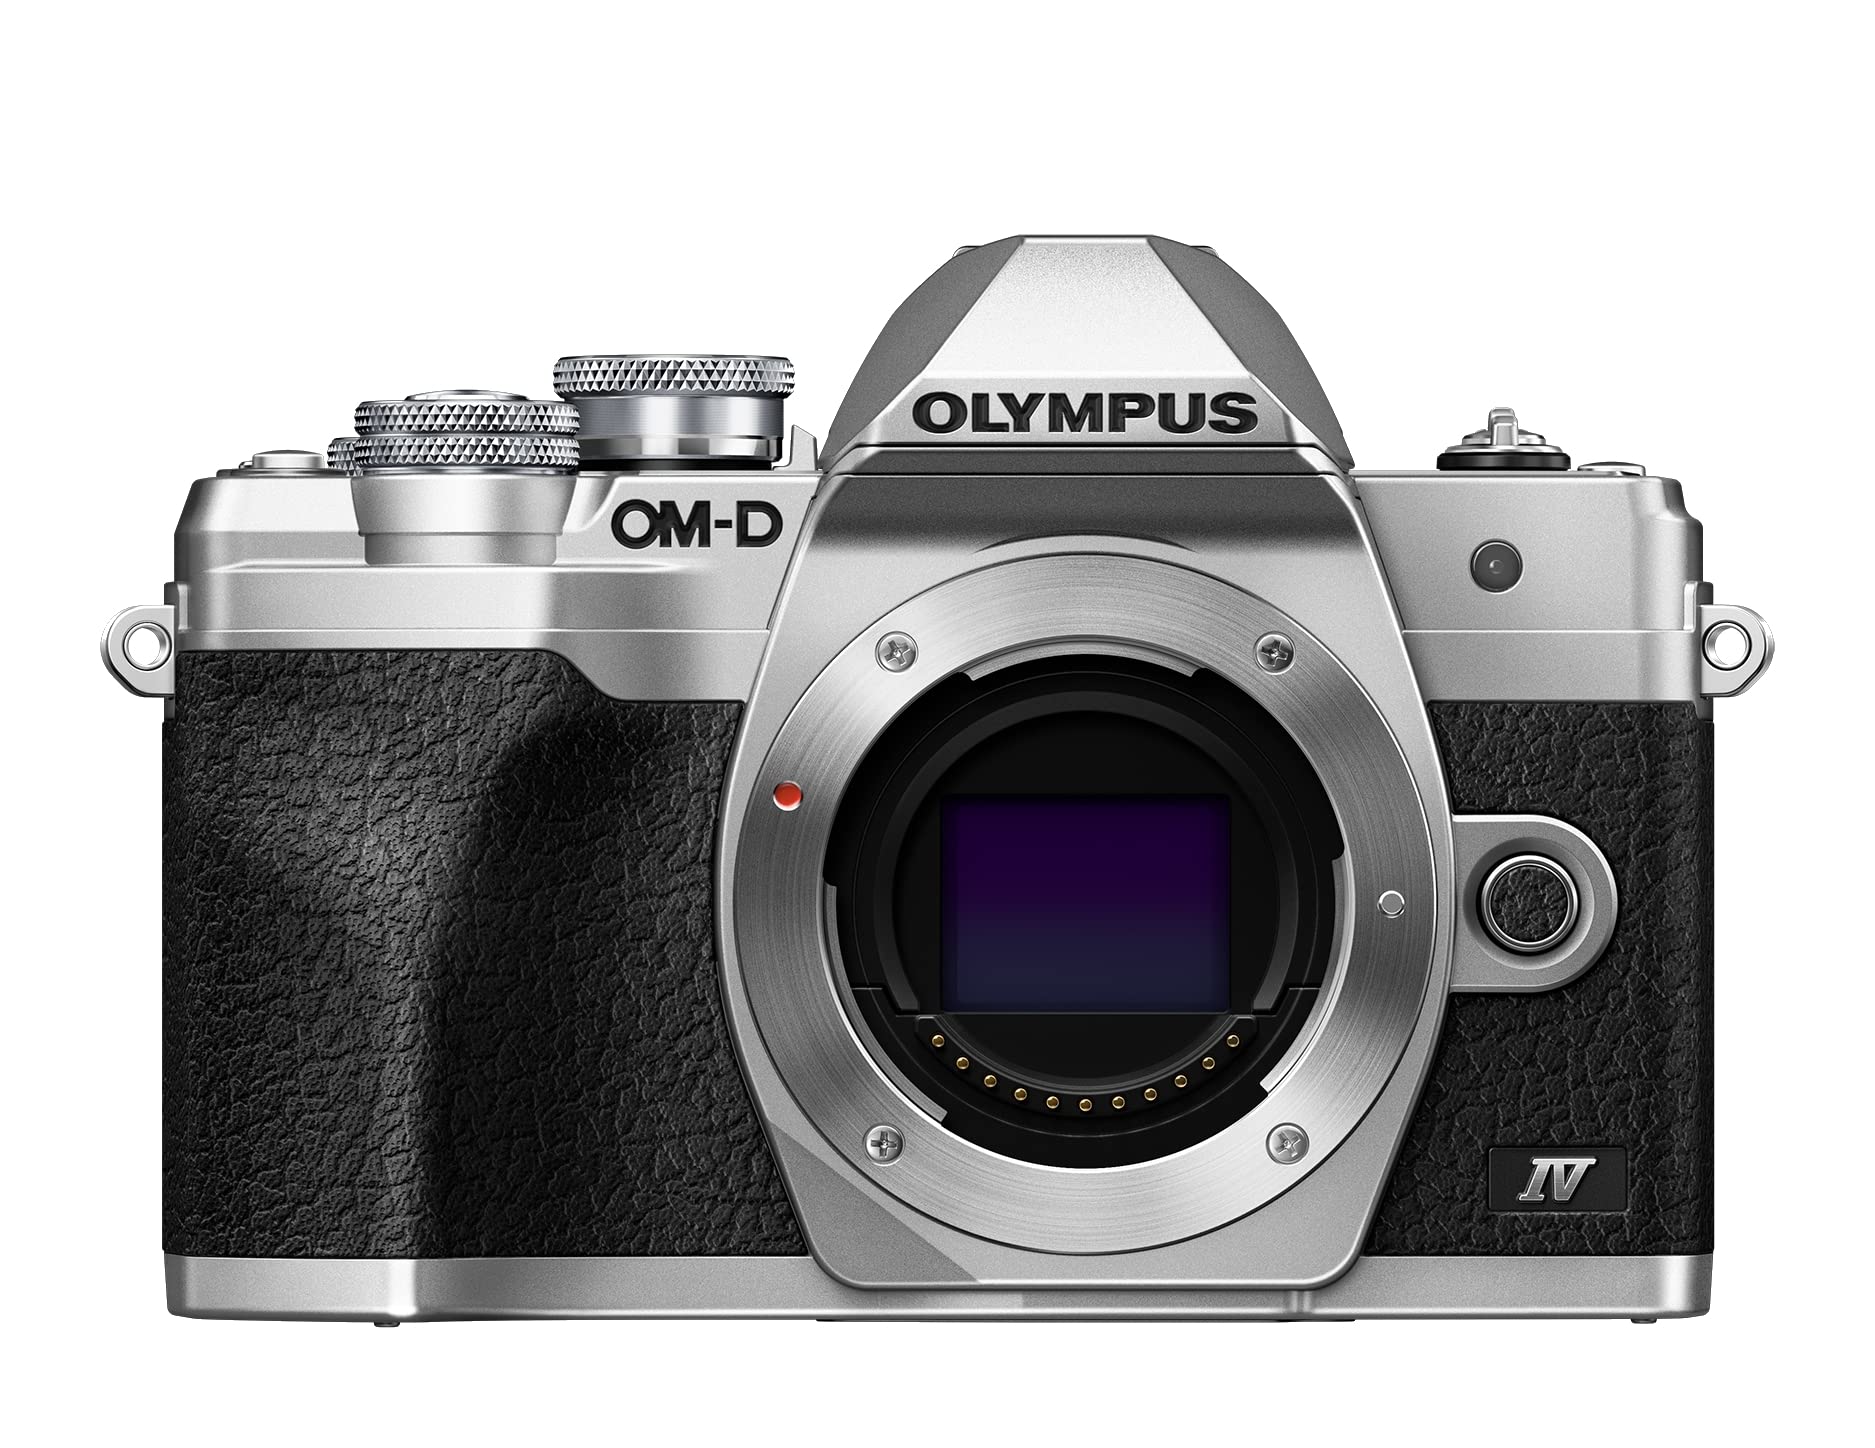 OM SYSTEM/オリンパス OLYMPUS ミラーレス一眼カメラ OM-D E-M10 MarkIVボディー シルバー